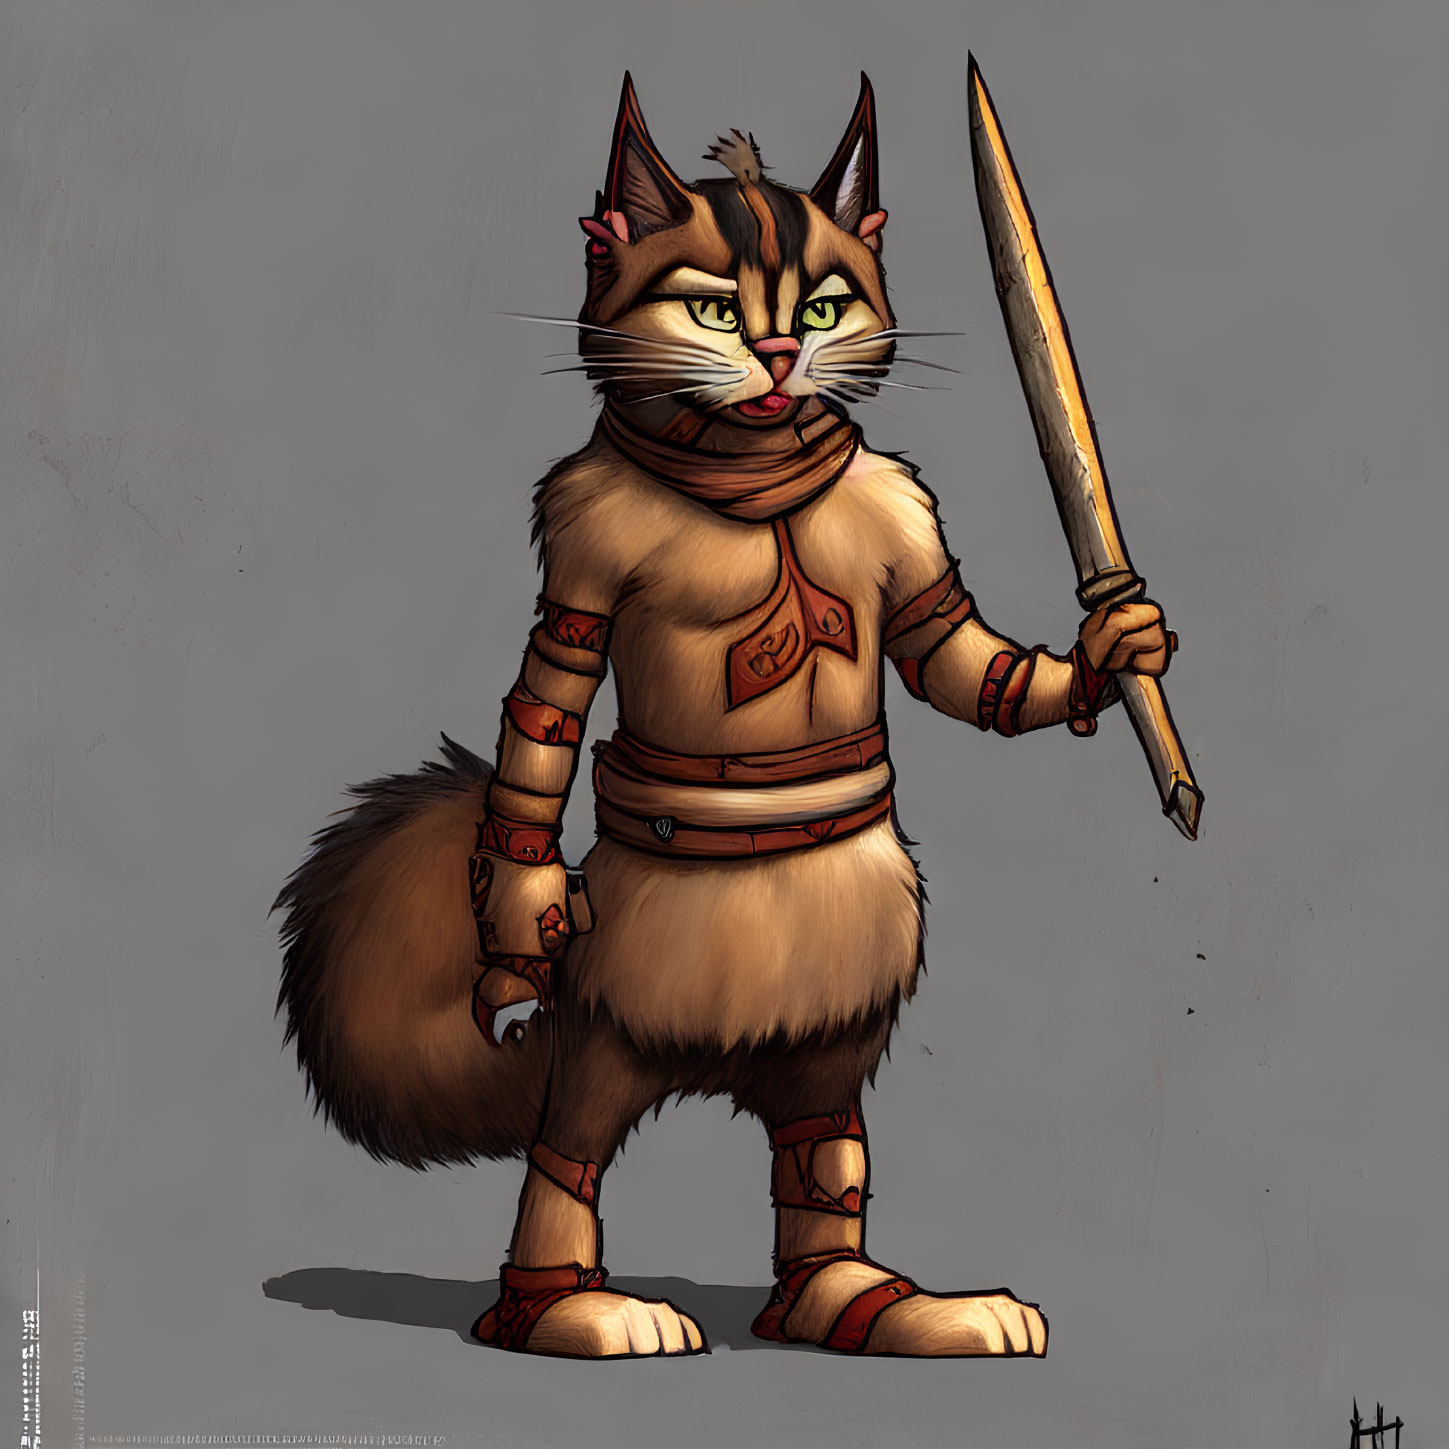 Anthropomorphic Cat Warrior in Tribal Attire with Sword